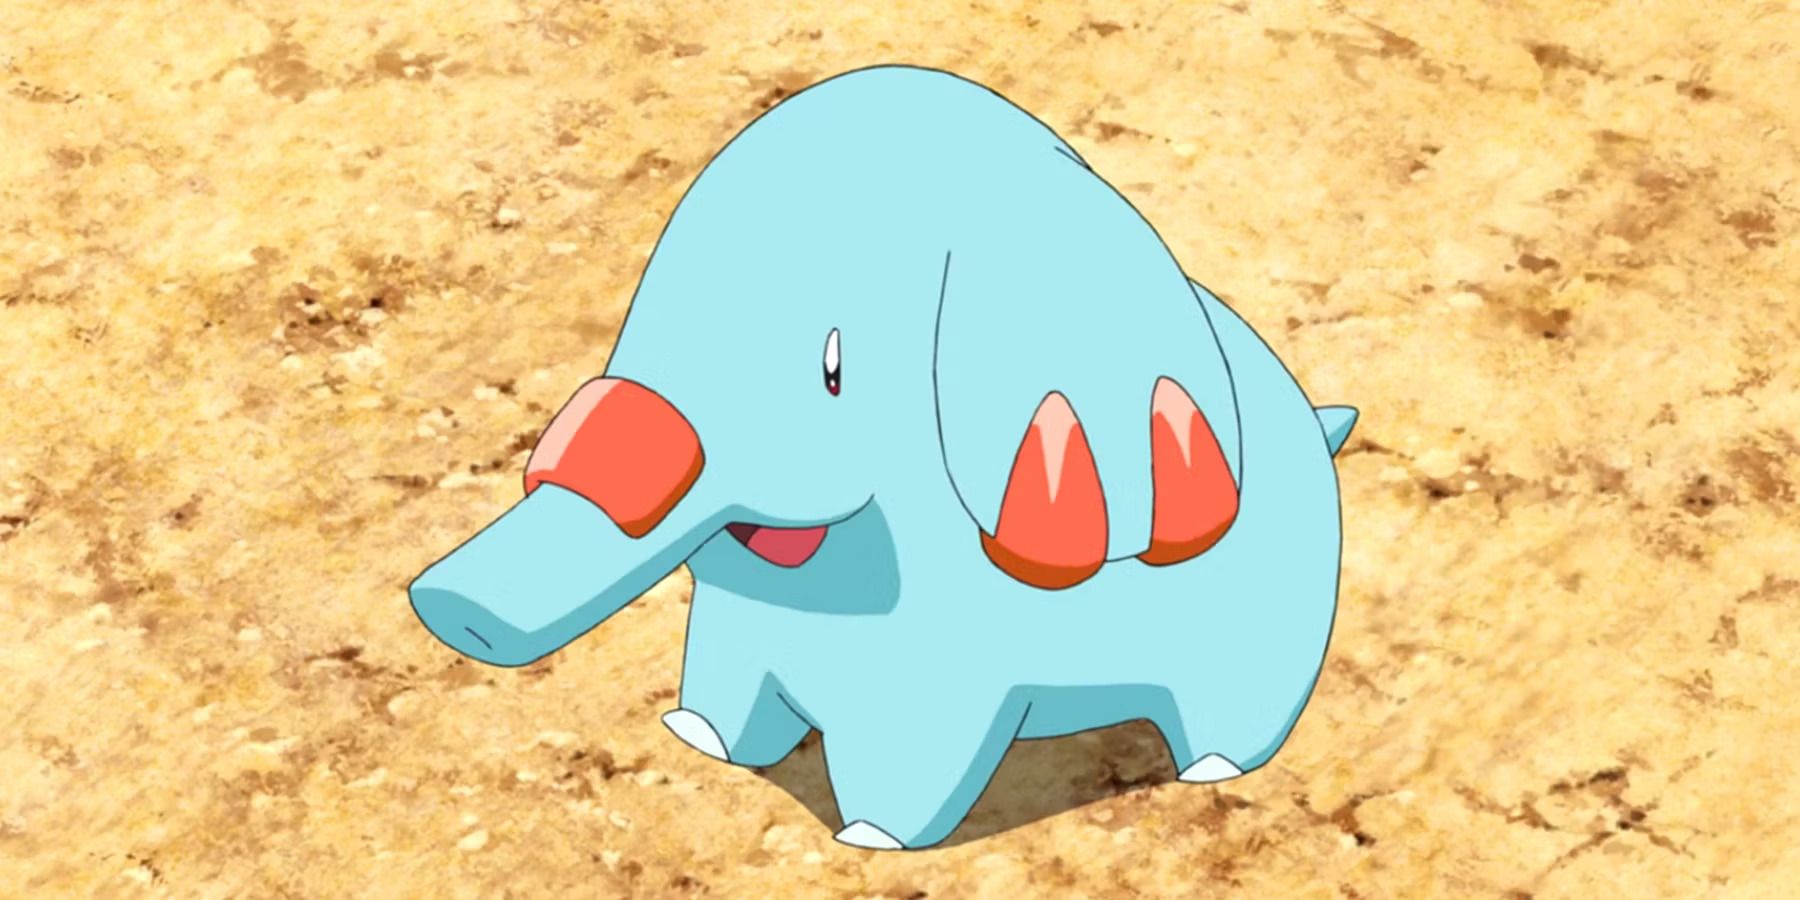 A still from the Pokémon anime featuring Phanpy, the Long Nose Pokémon.